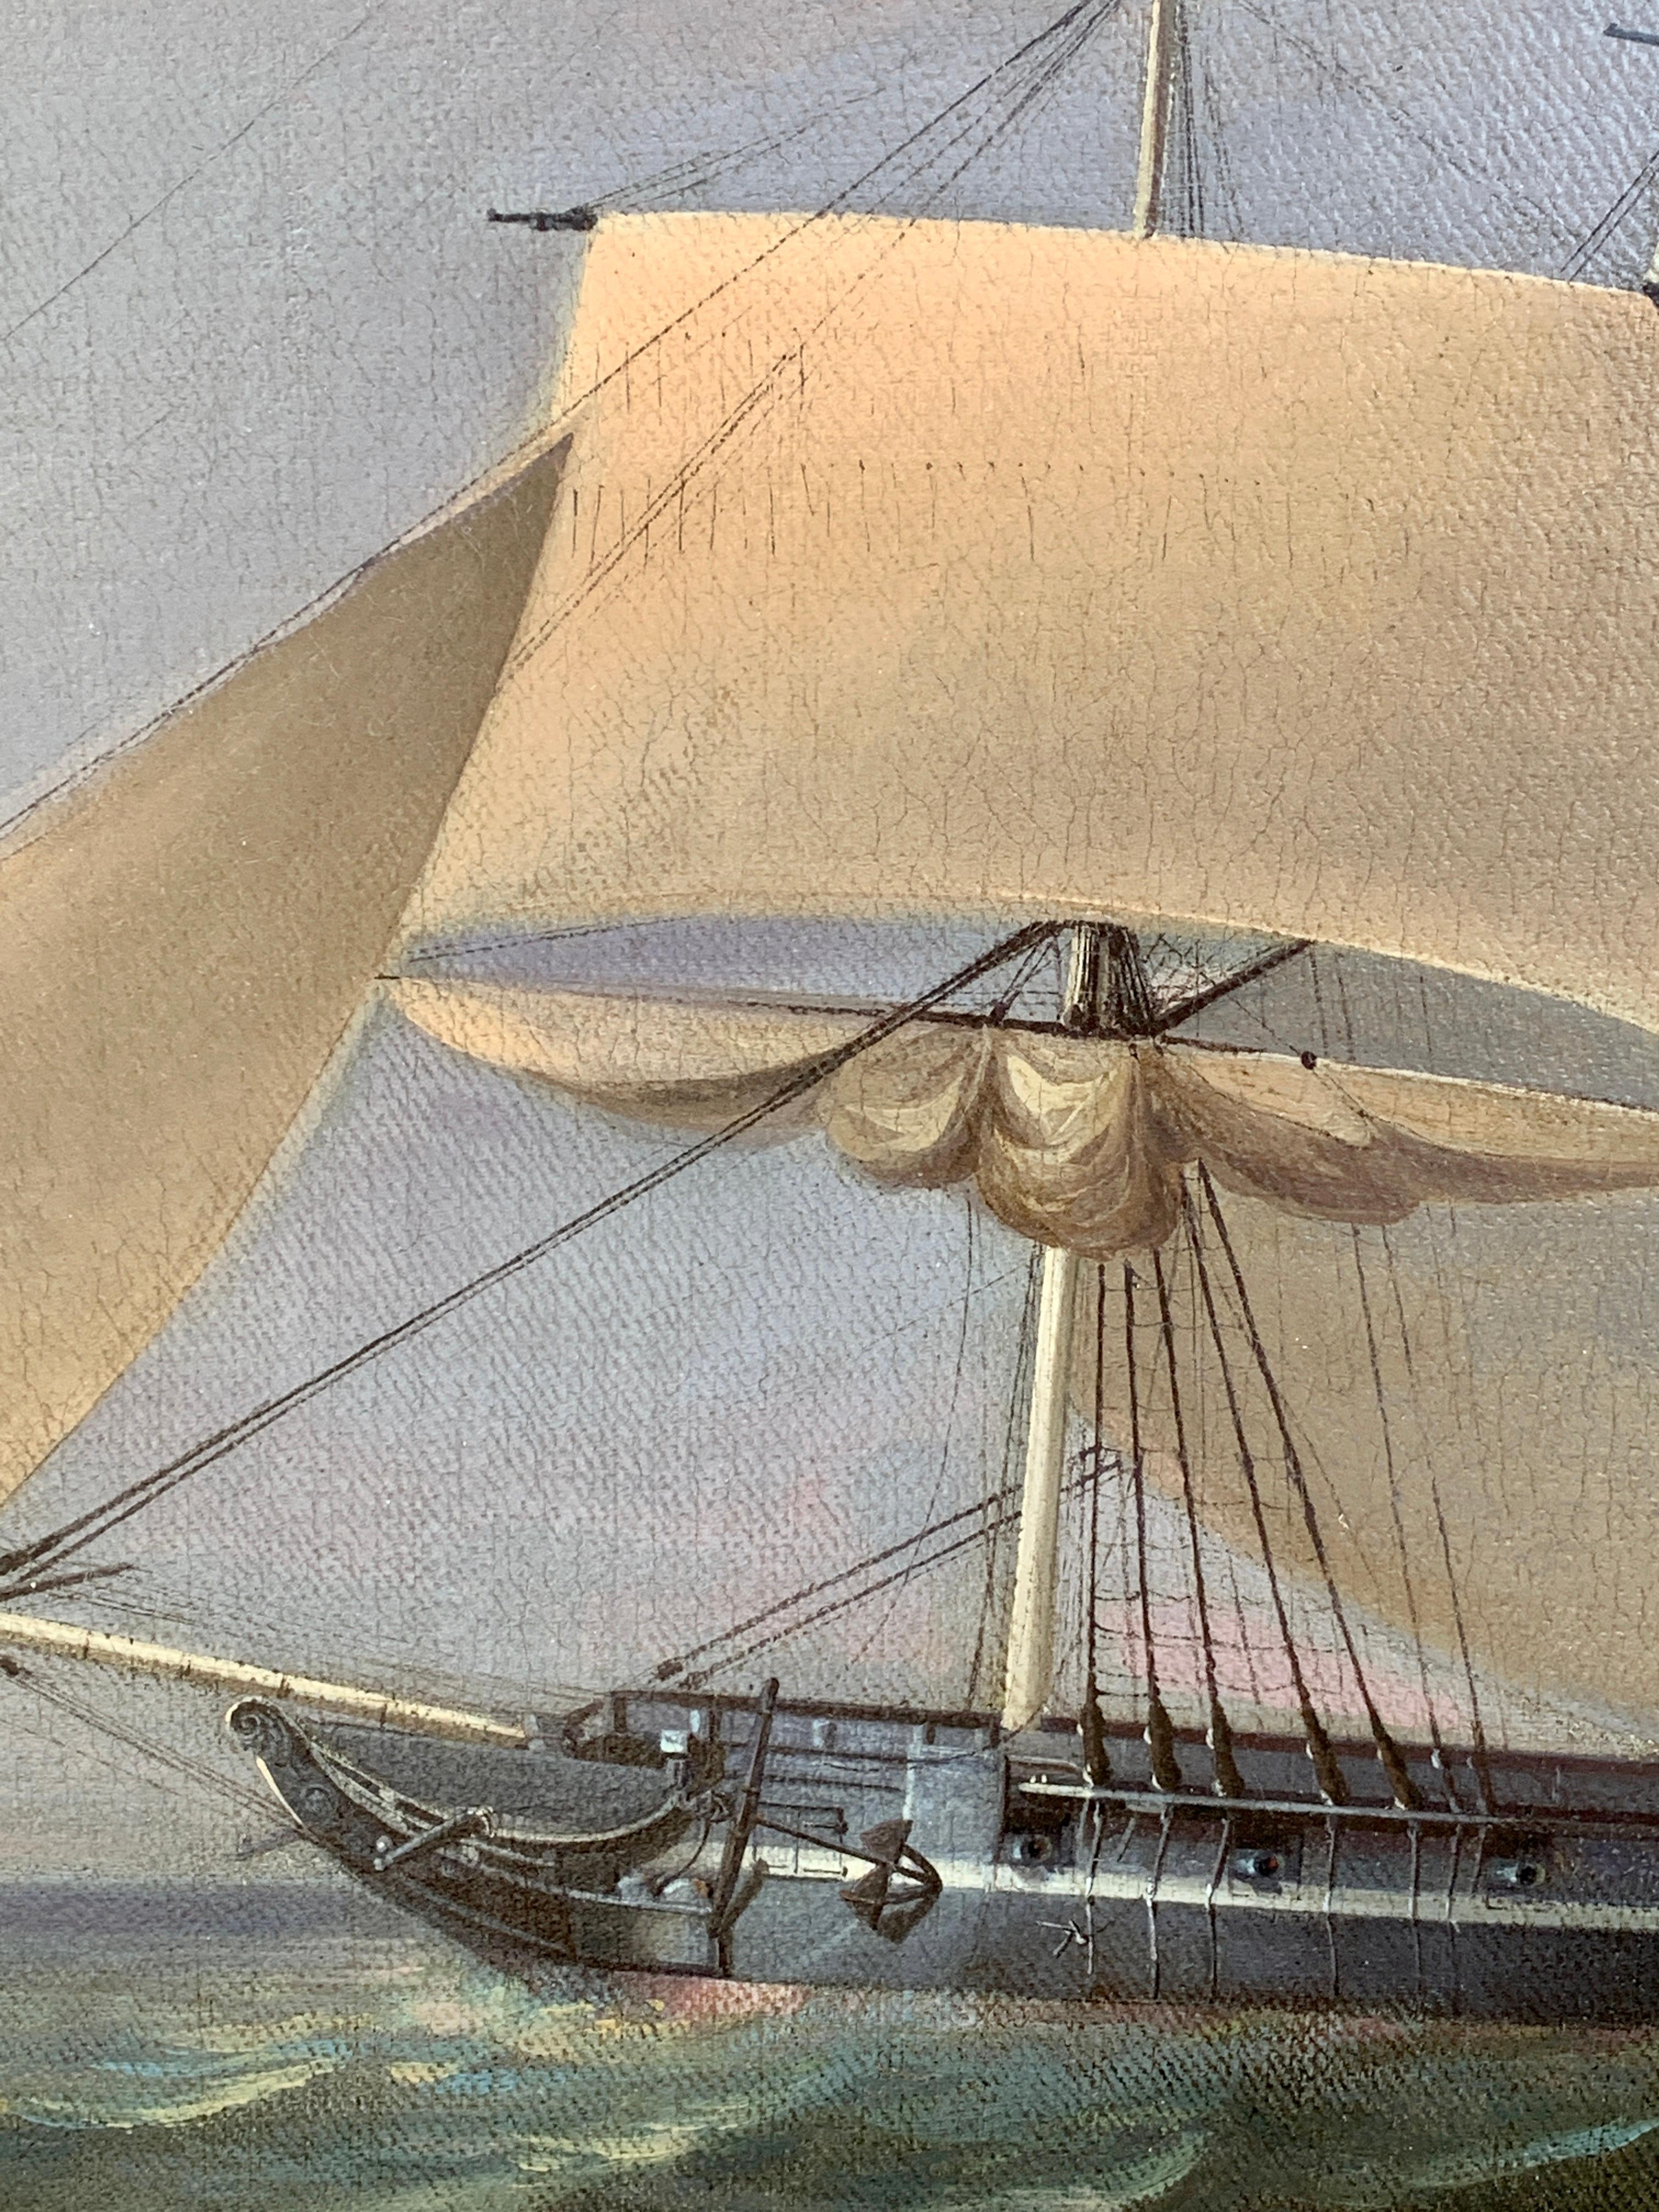 18th century sloop of war